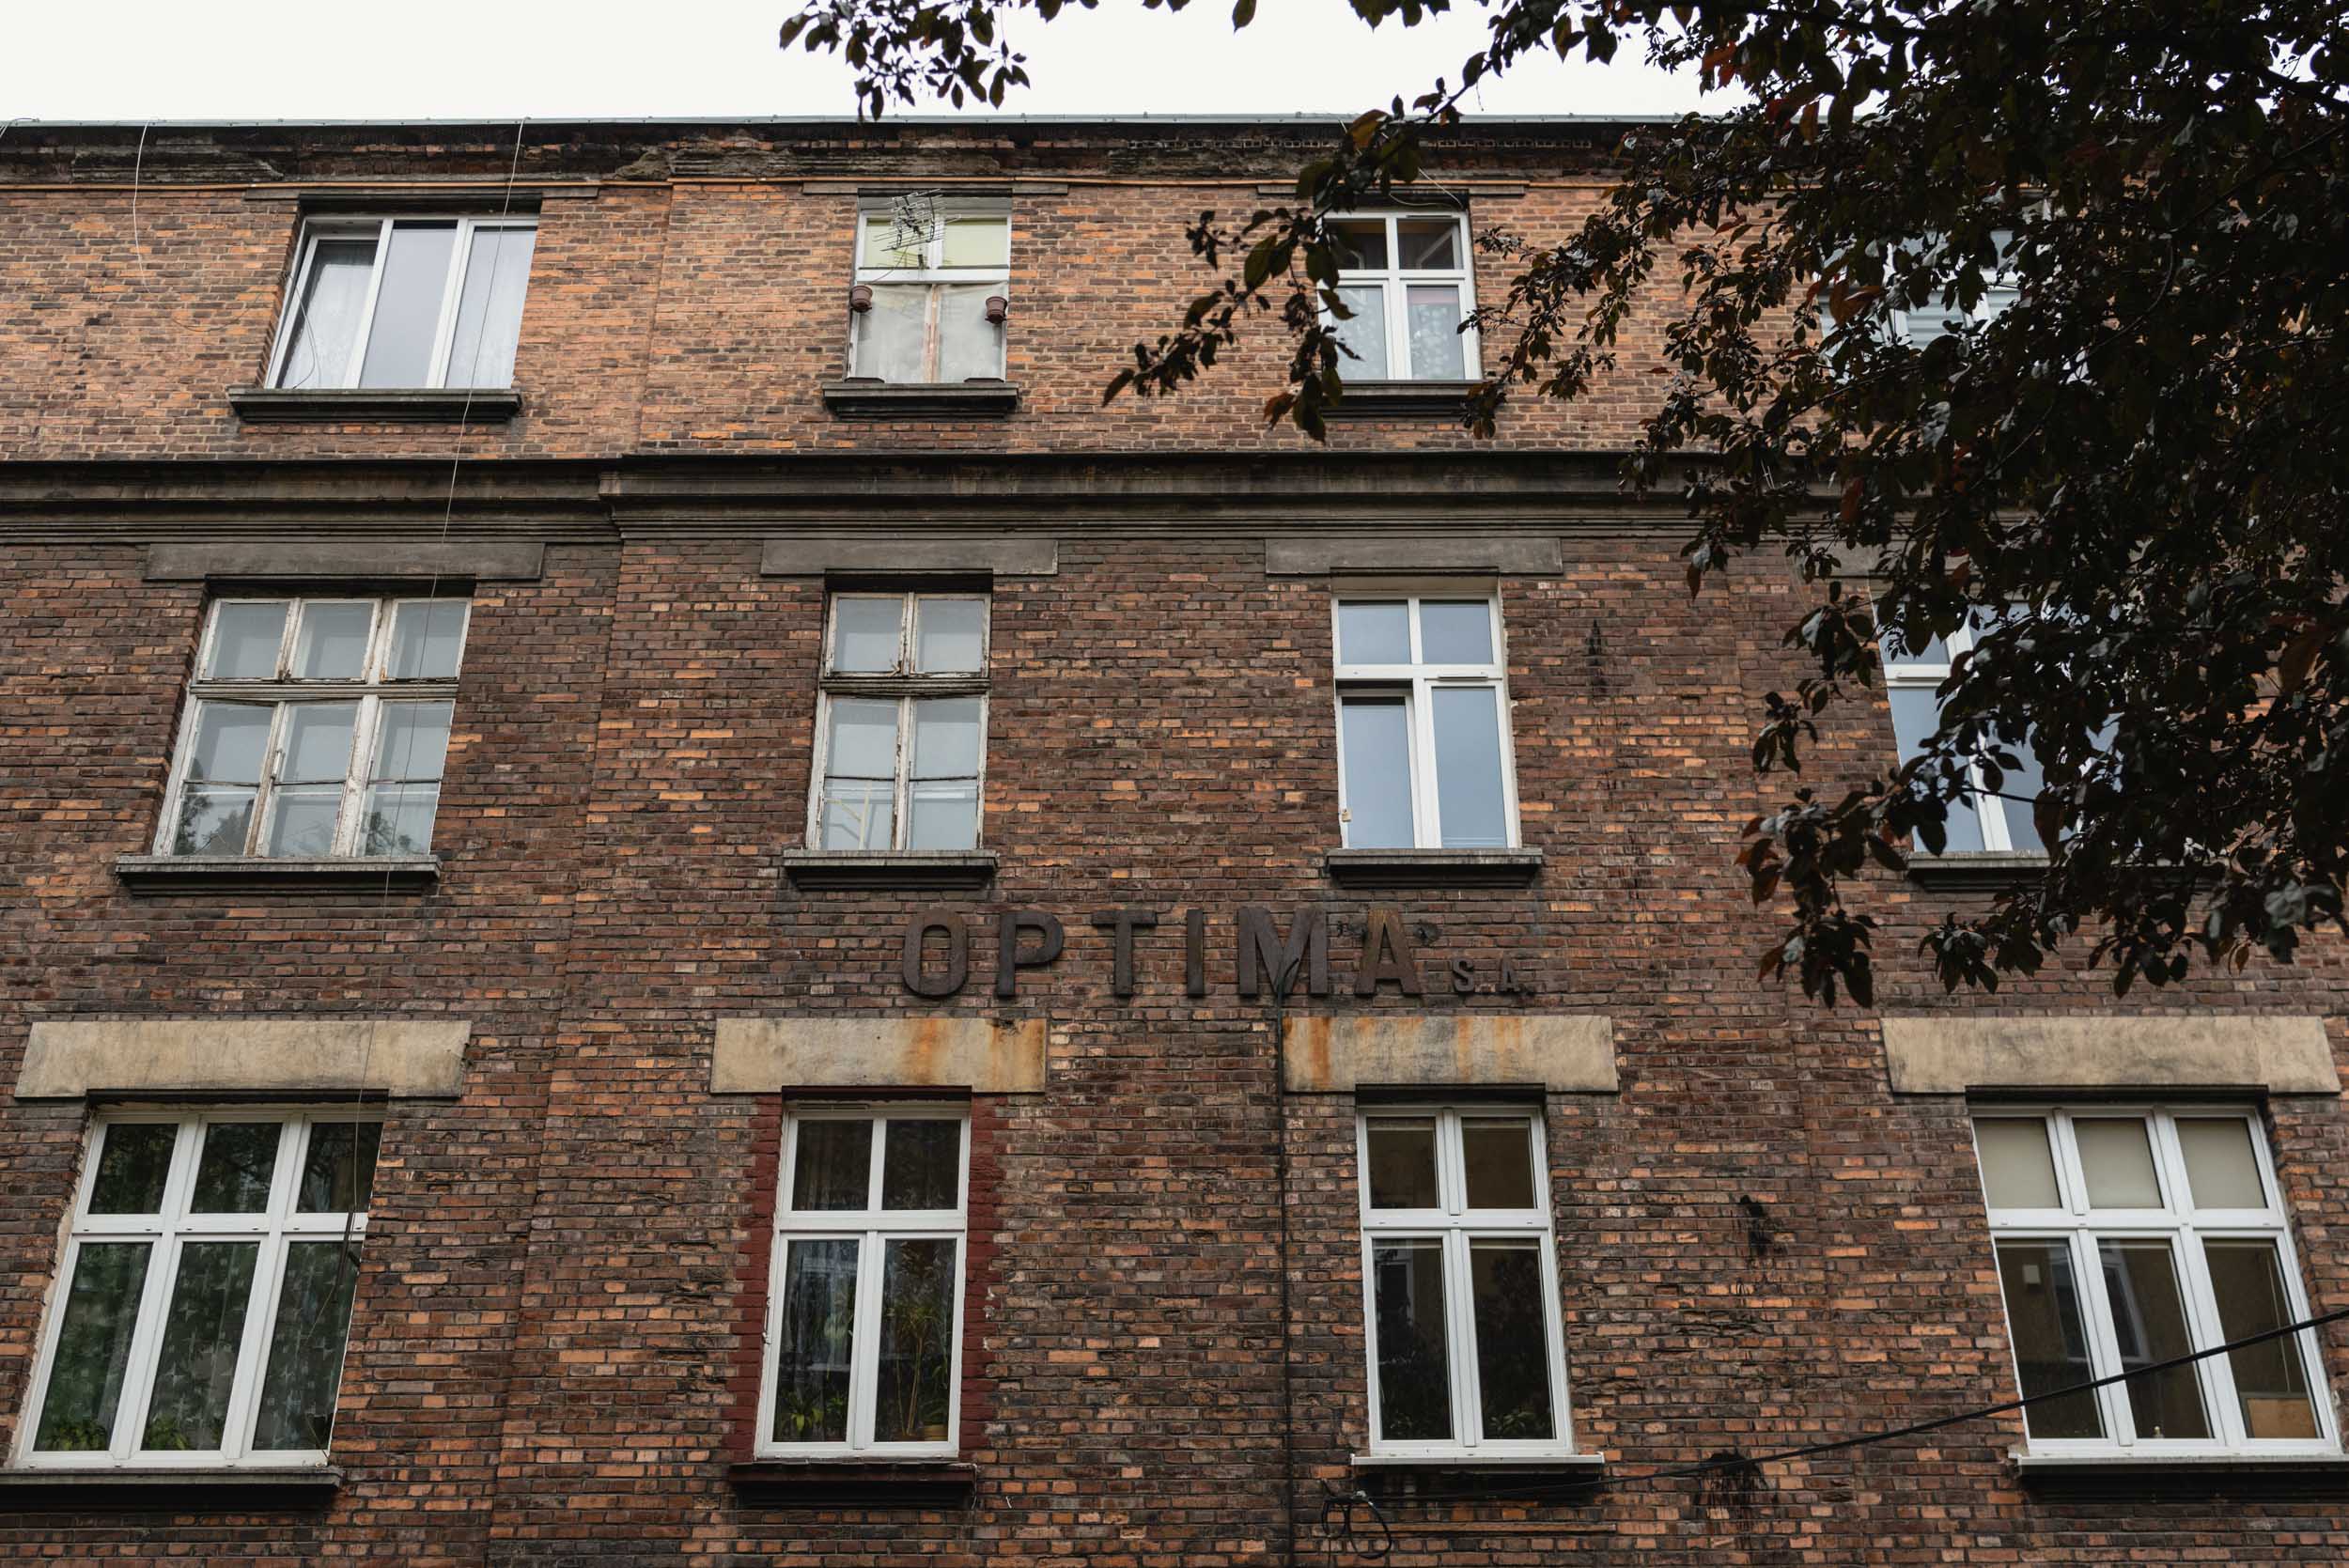 Optima Factory building Krakow Jewish Ghetto